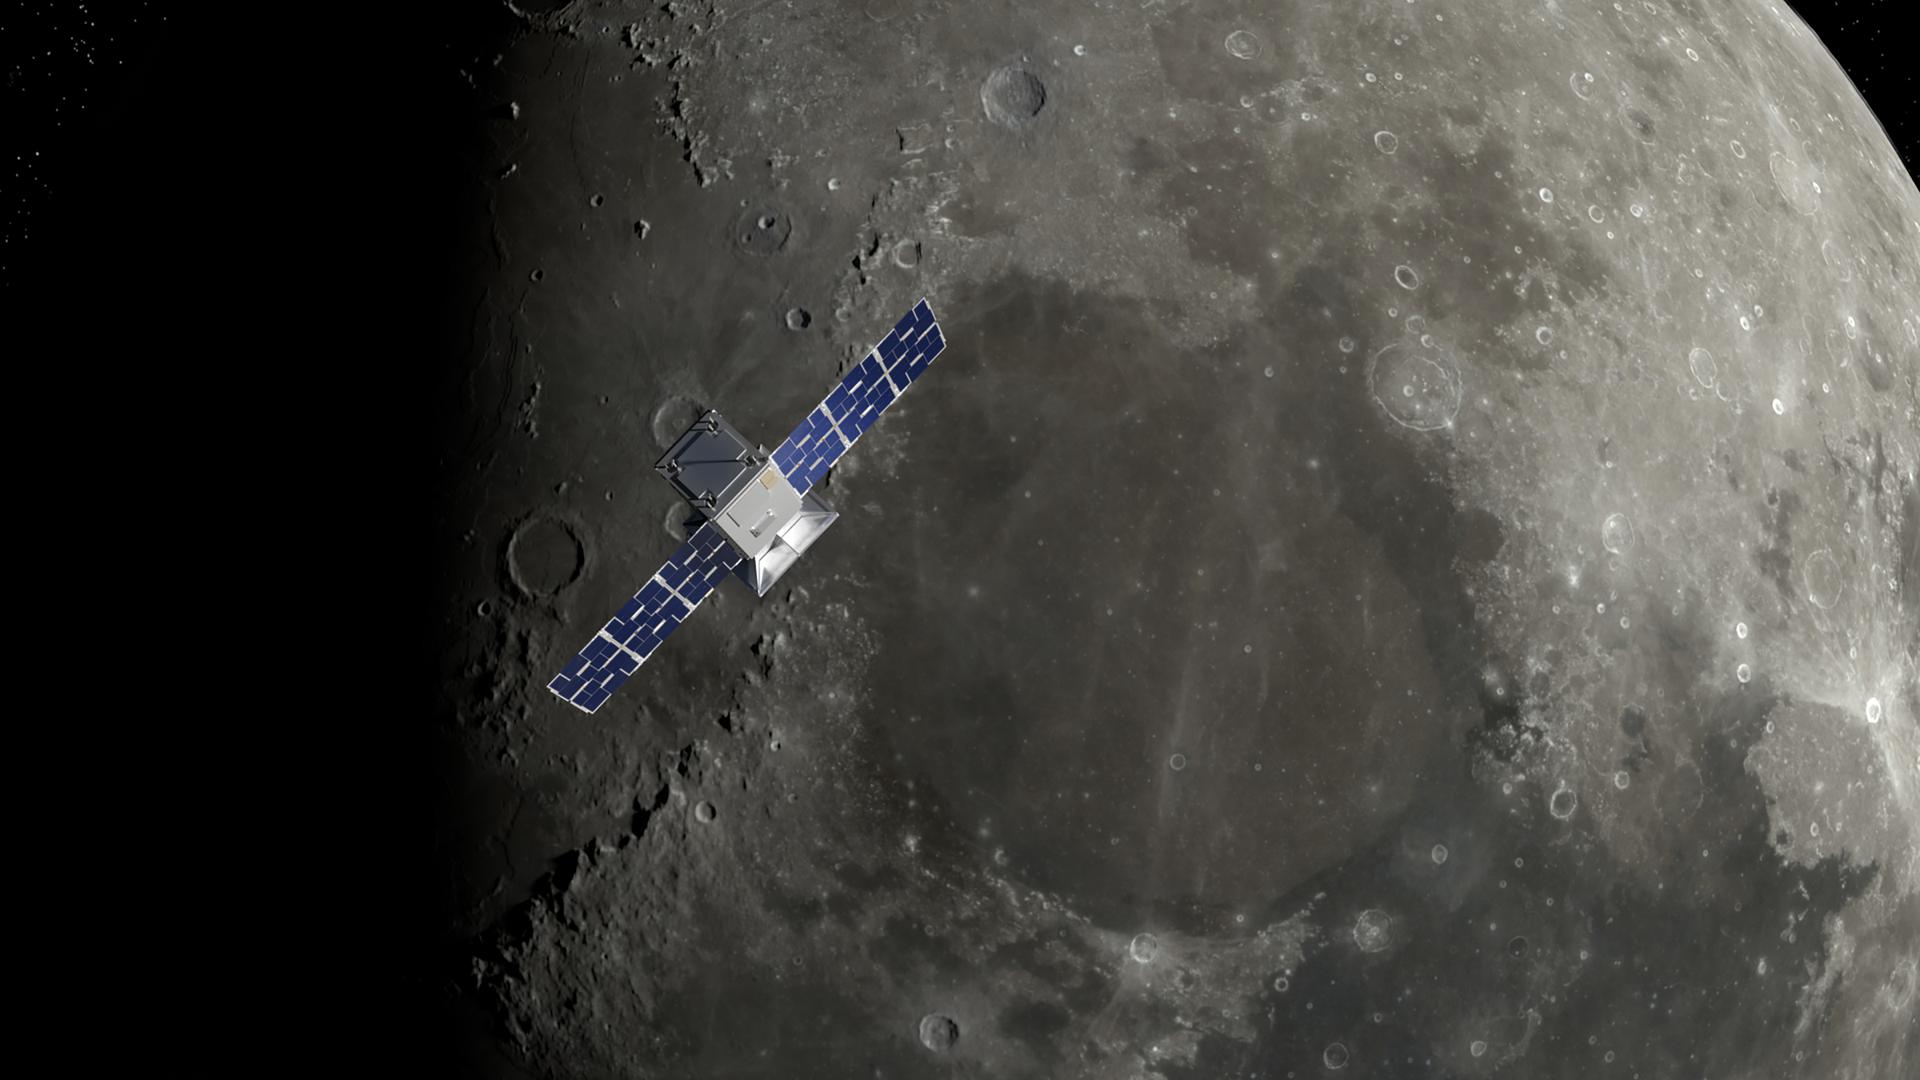 An artist’s conception of Nasa’s Capstone spacecraft in orbit around the Moon